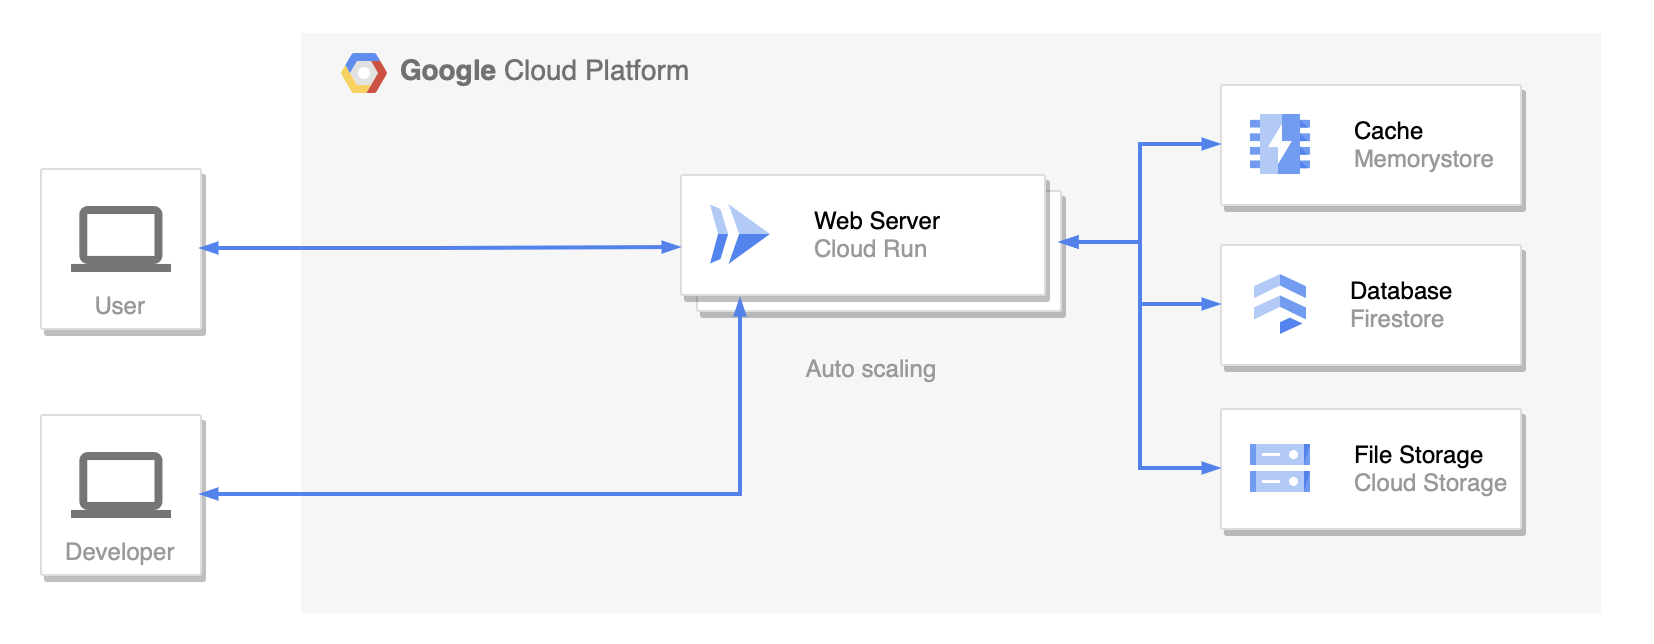 Cloud Runのシステム構成の例 - Google Cloud Platform